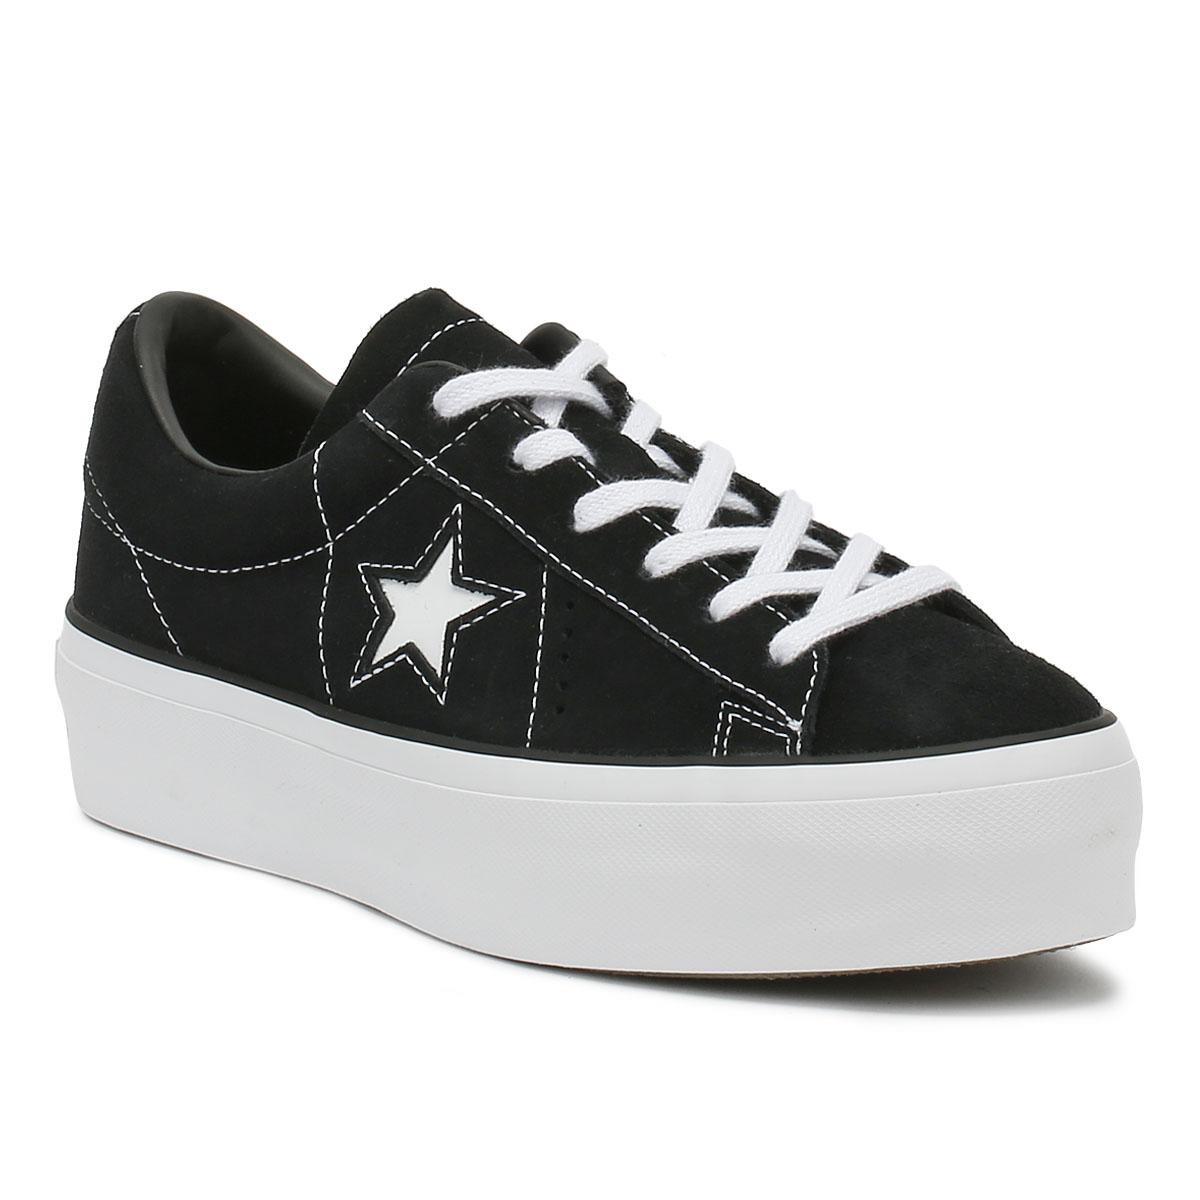 converse one star black platform sneakers